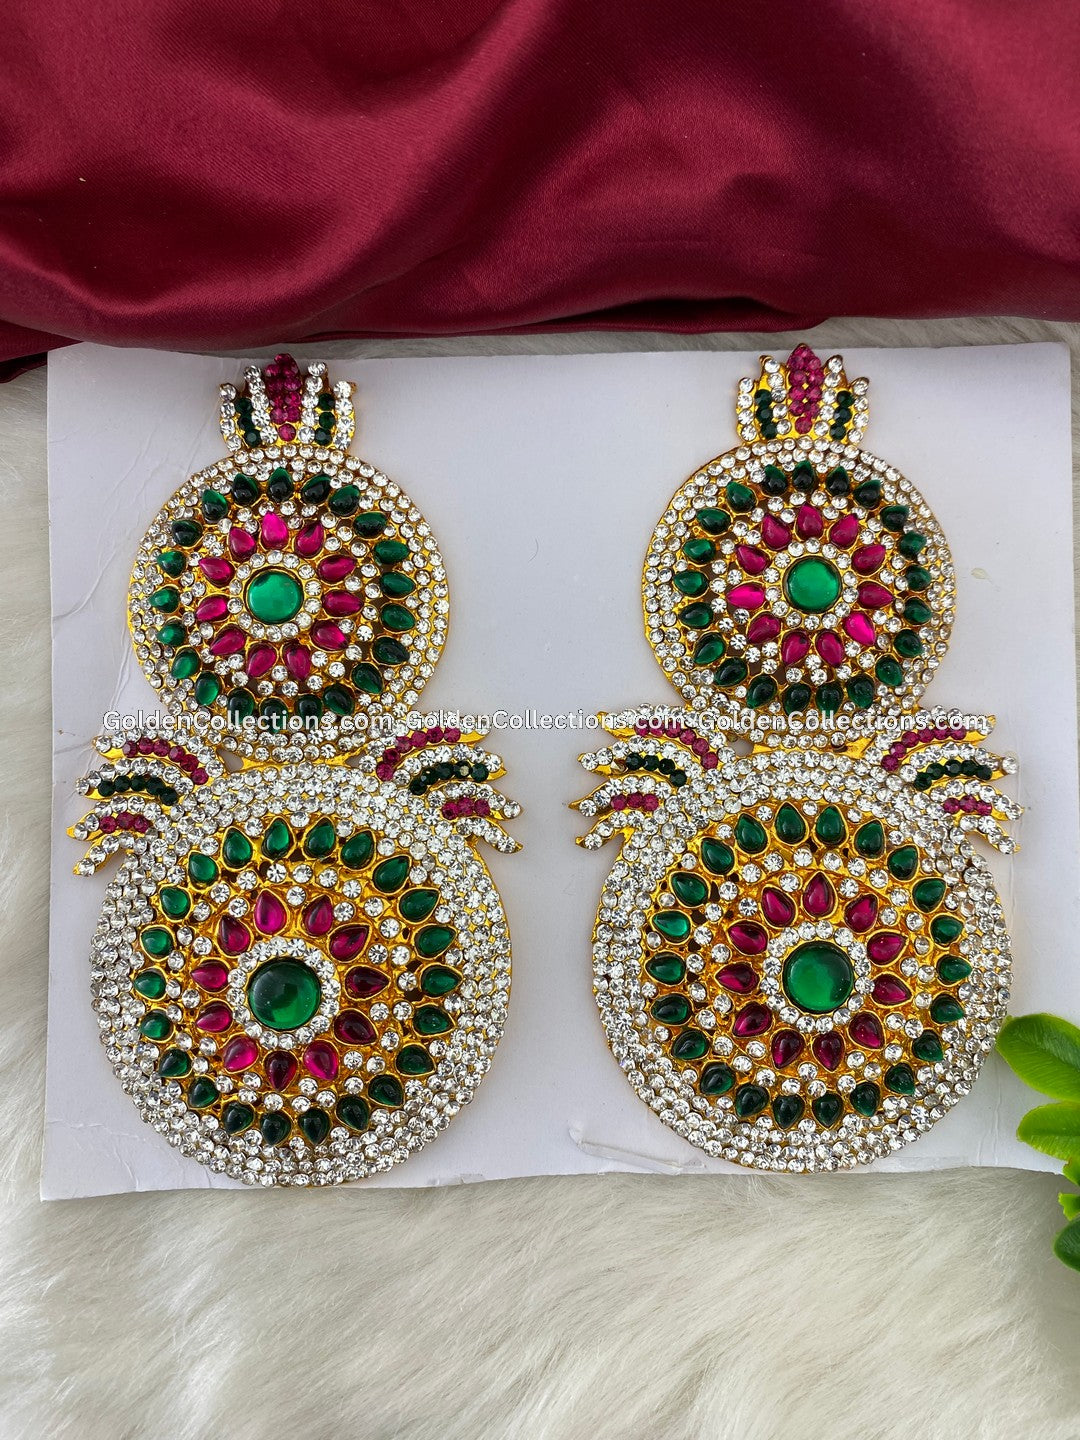 Hindu Goddess Jewellery Earrings - Ornate Adornments - DGE-126